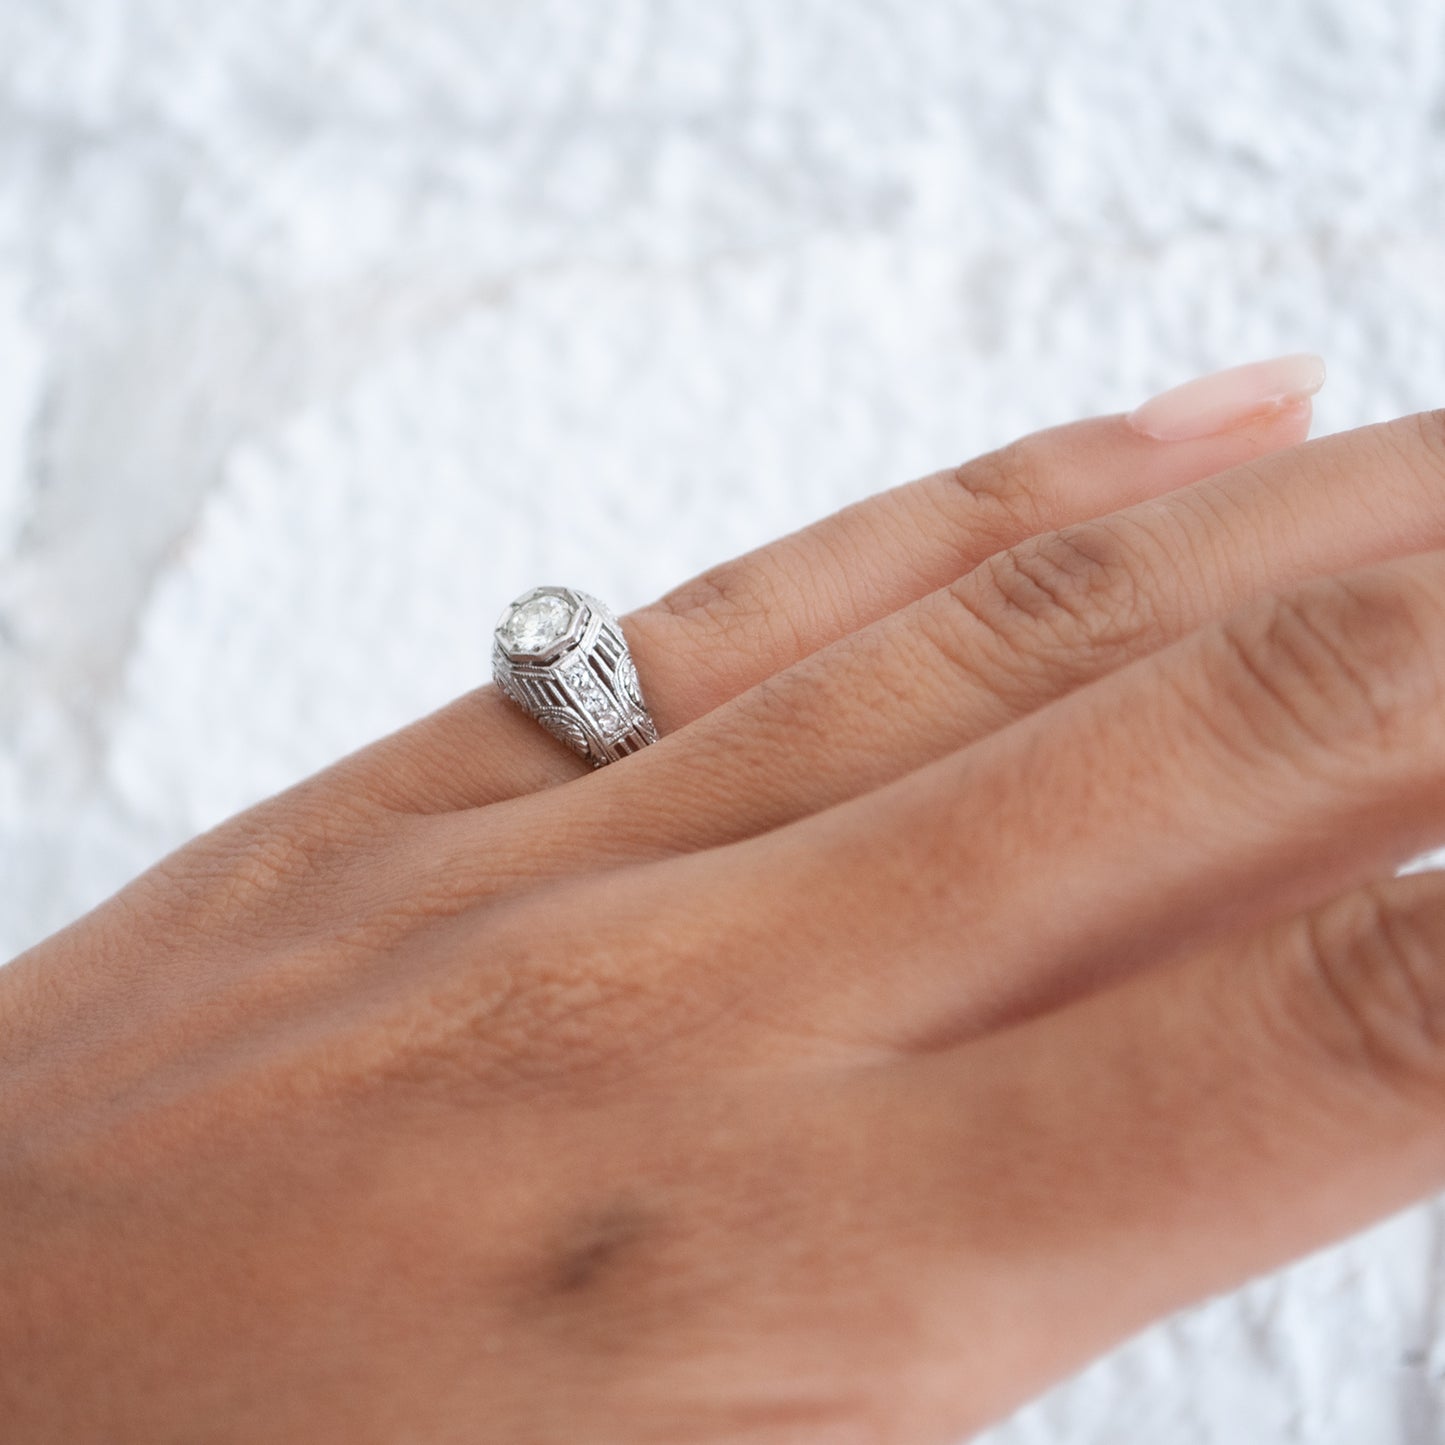 Art Deco Filigree Diamond Ring